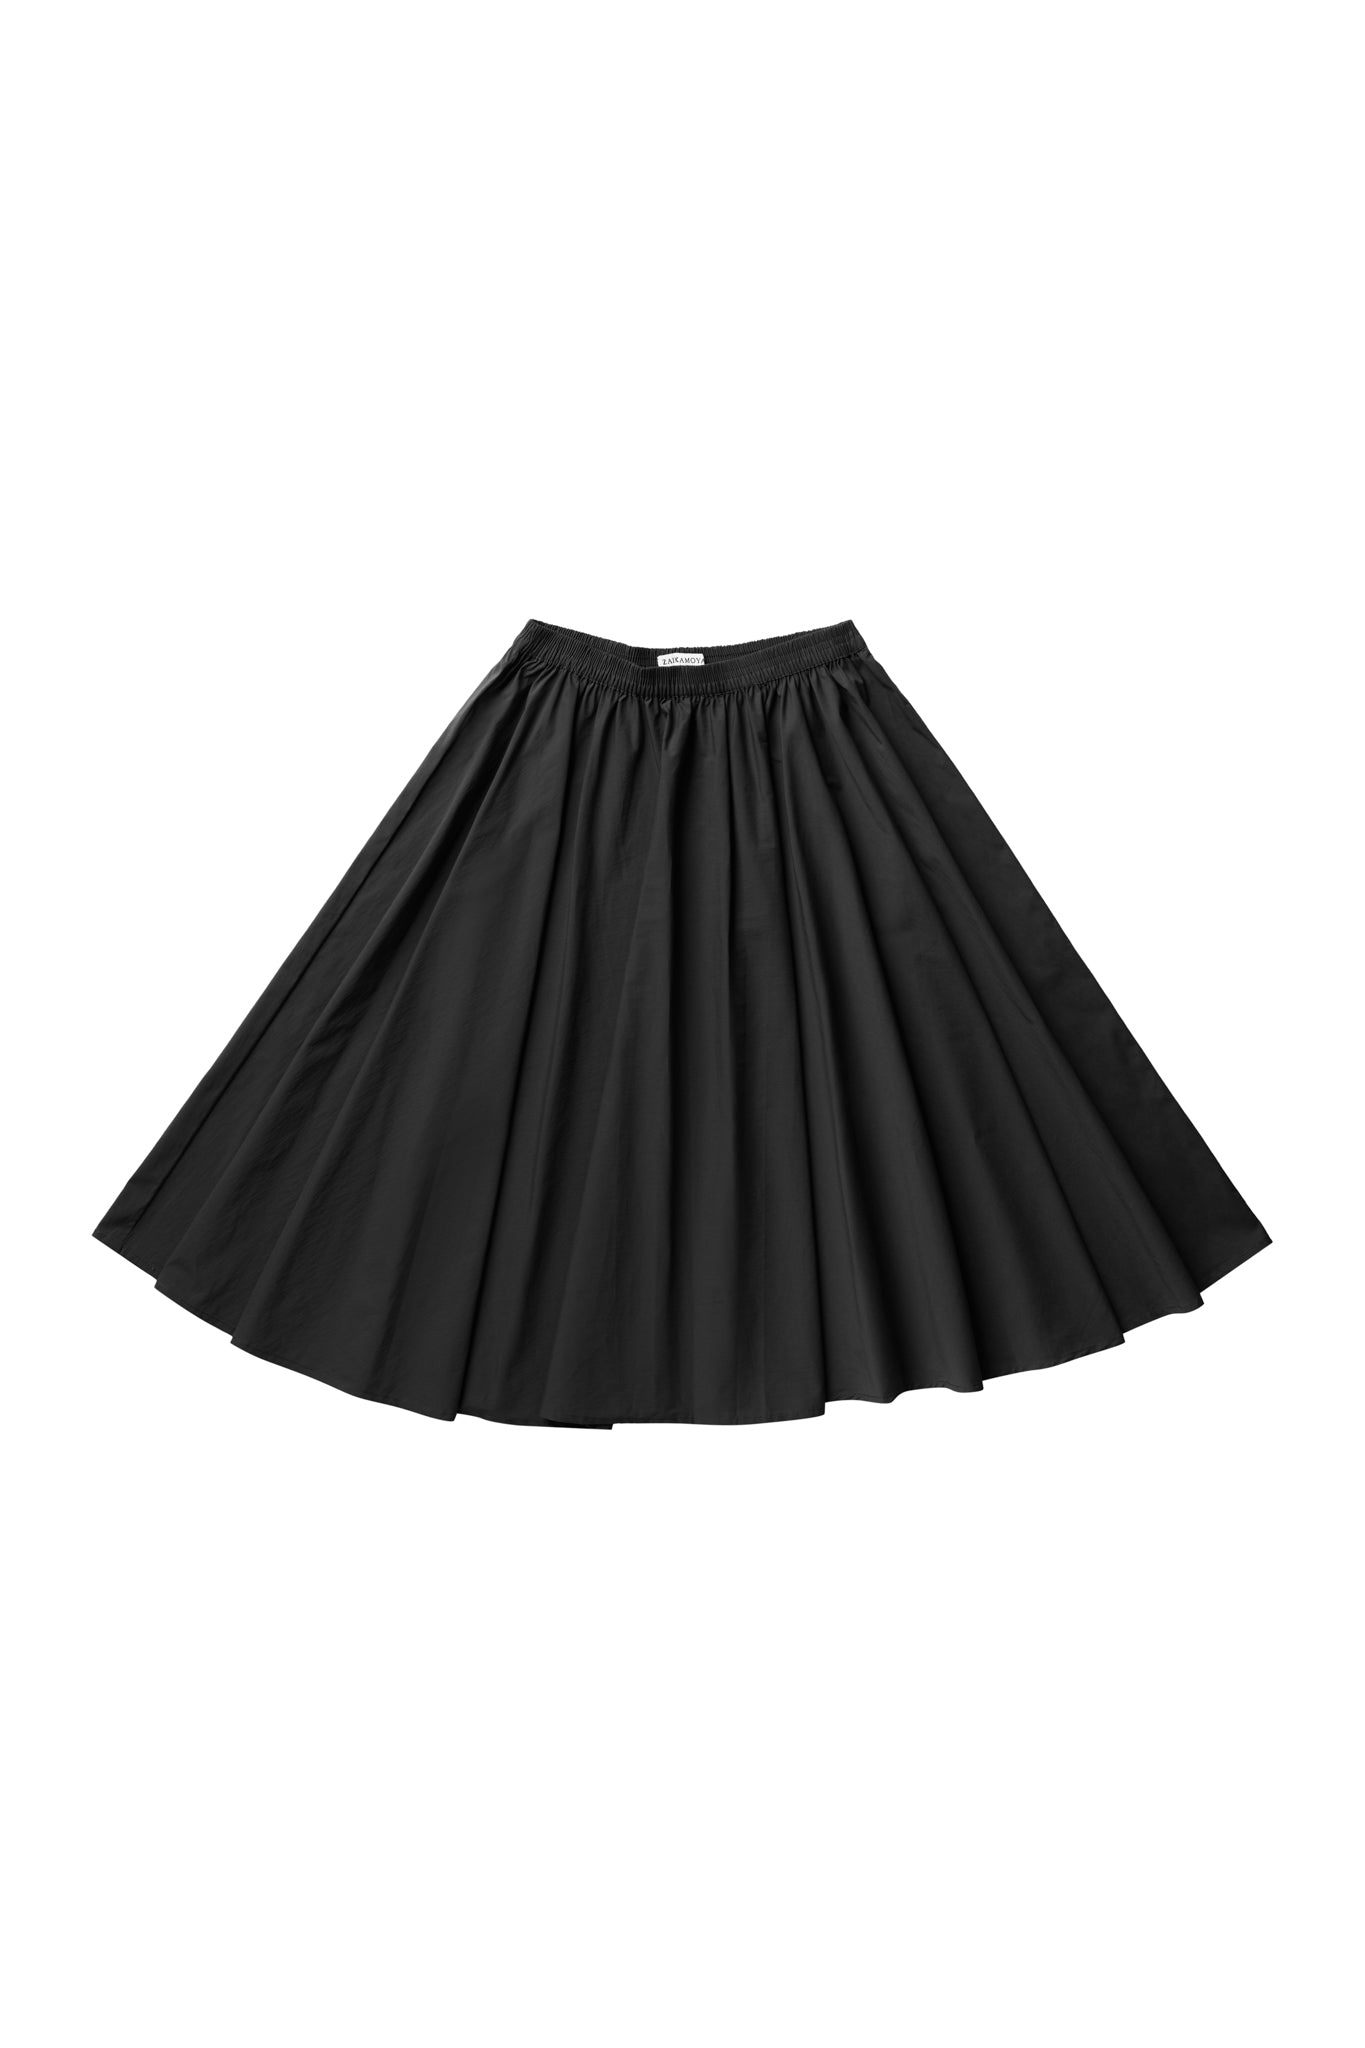 Black Cotton Circle Skirt #2150 FINAL SALE